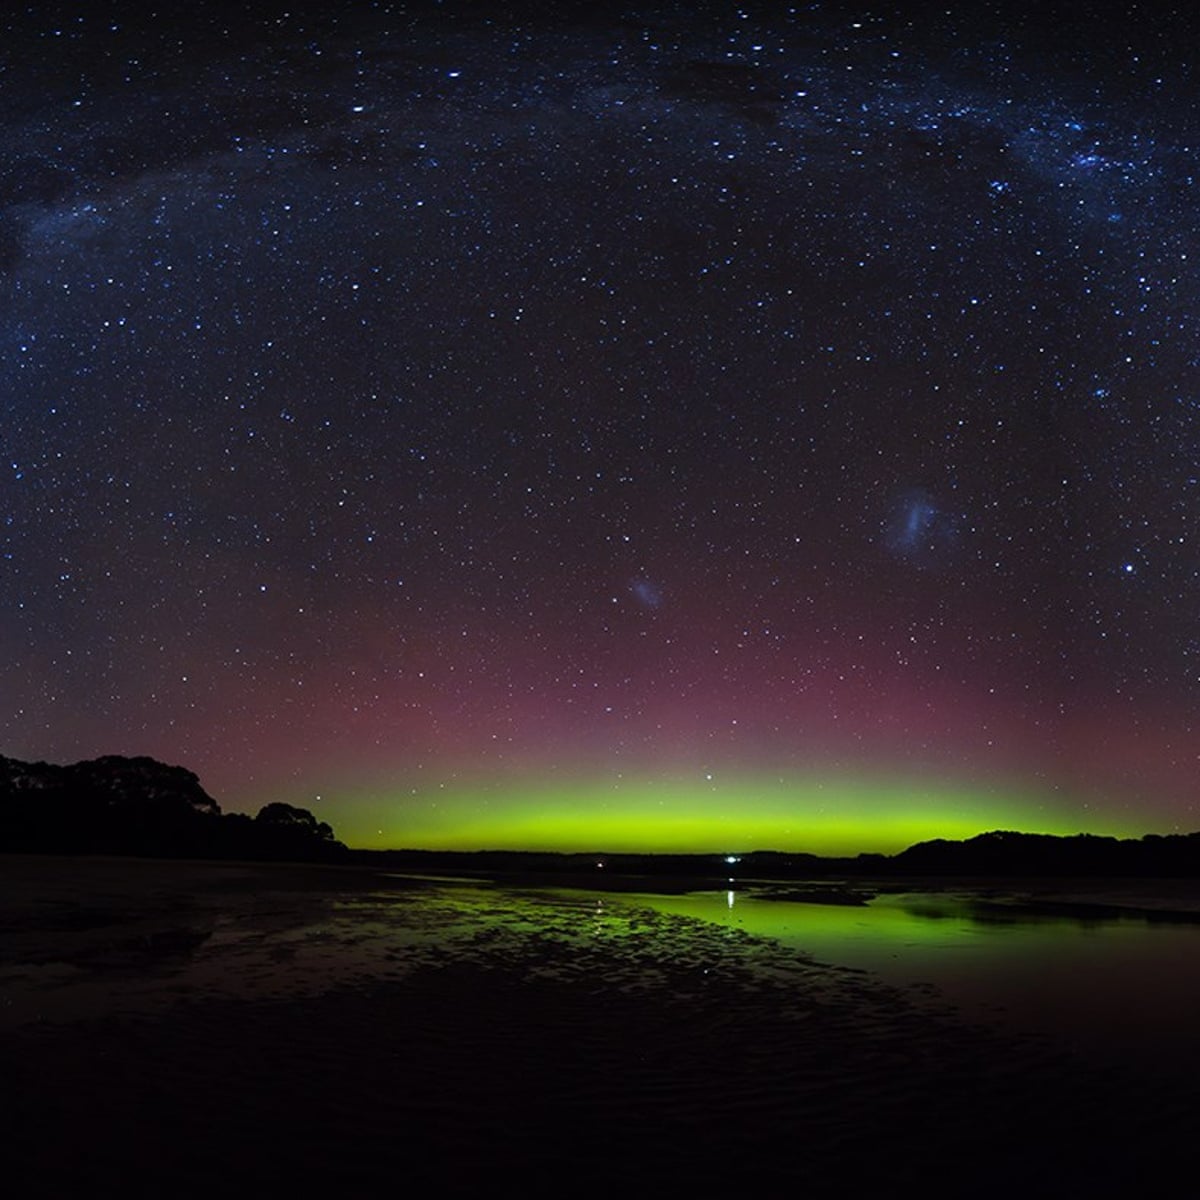 Huge Naked Eye Beams': Spectacular Aurora Australis Lights Up The Southern Skies